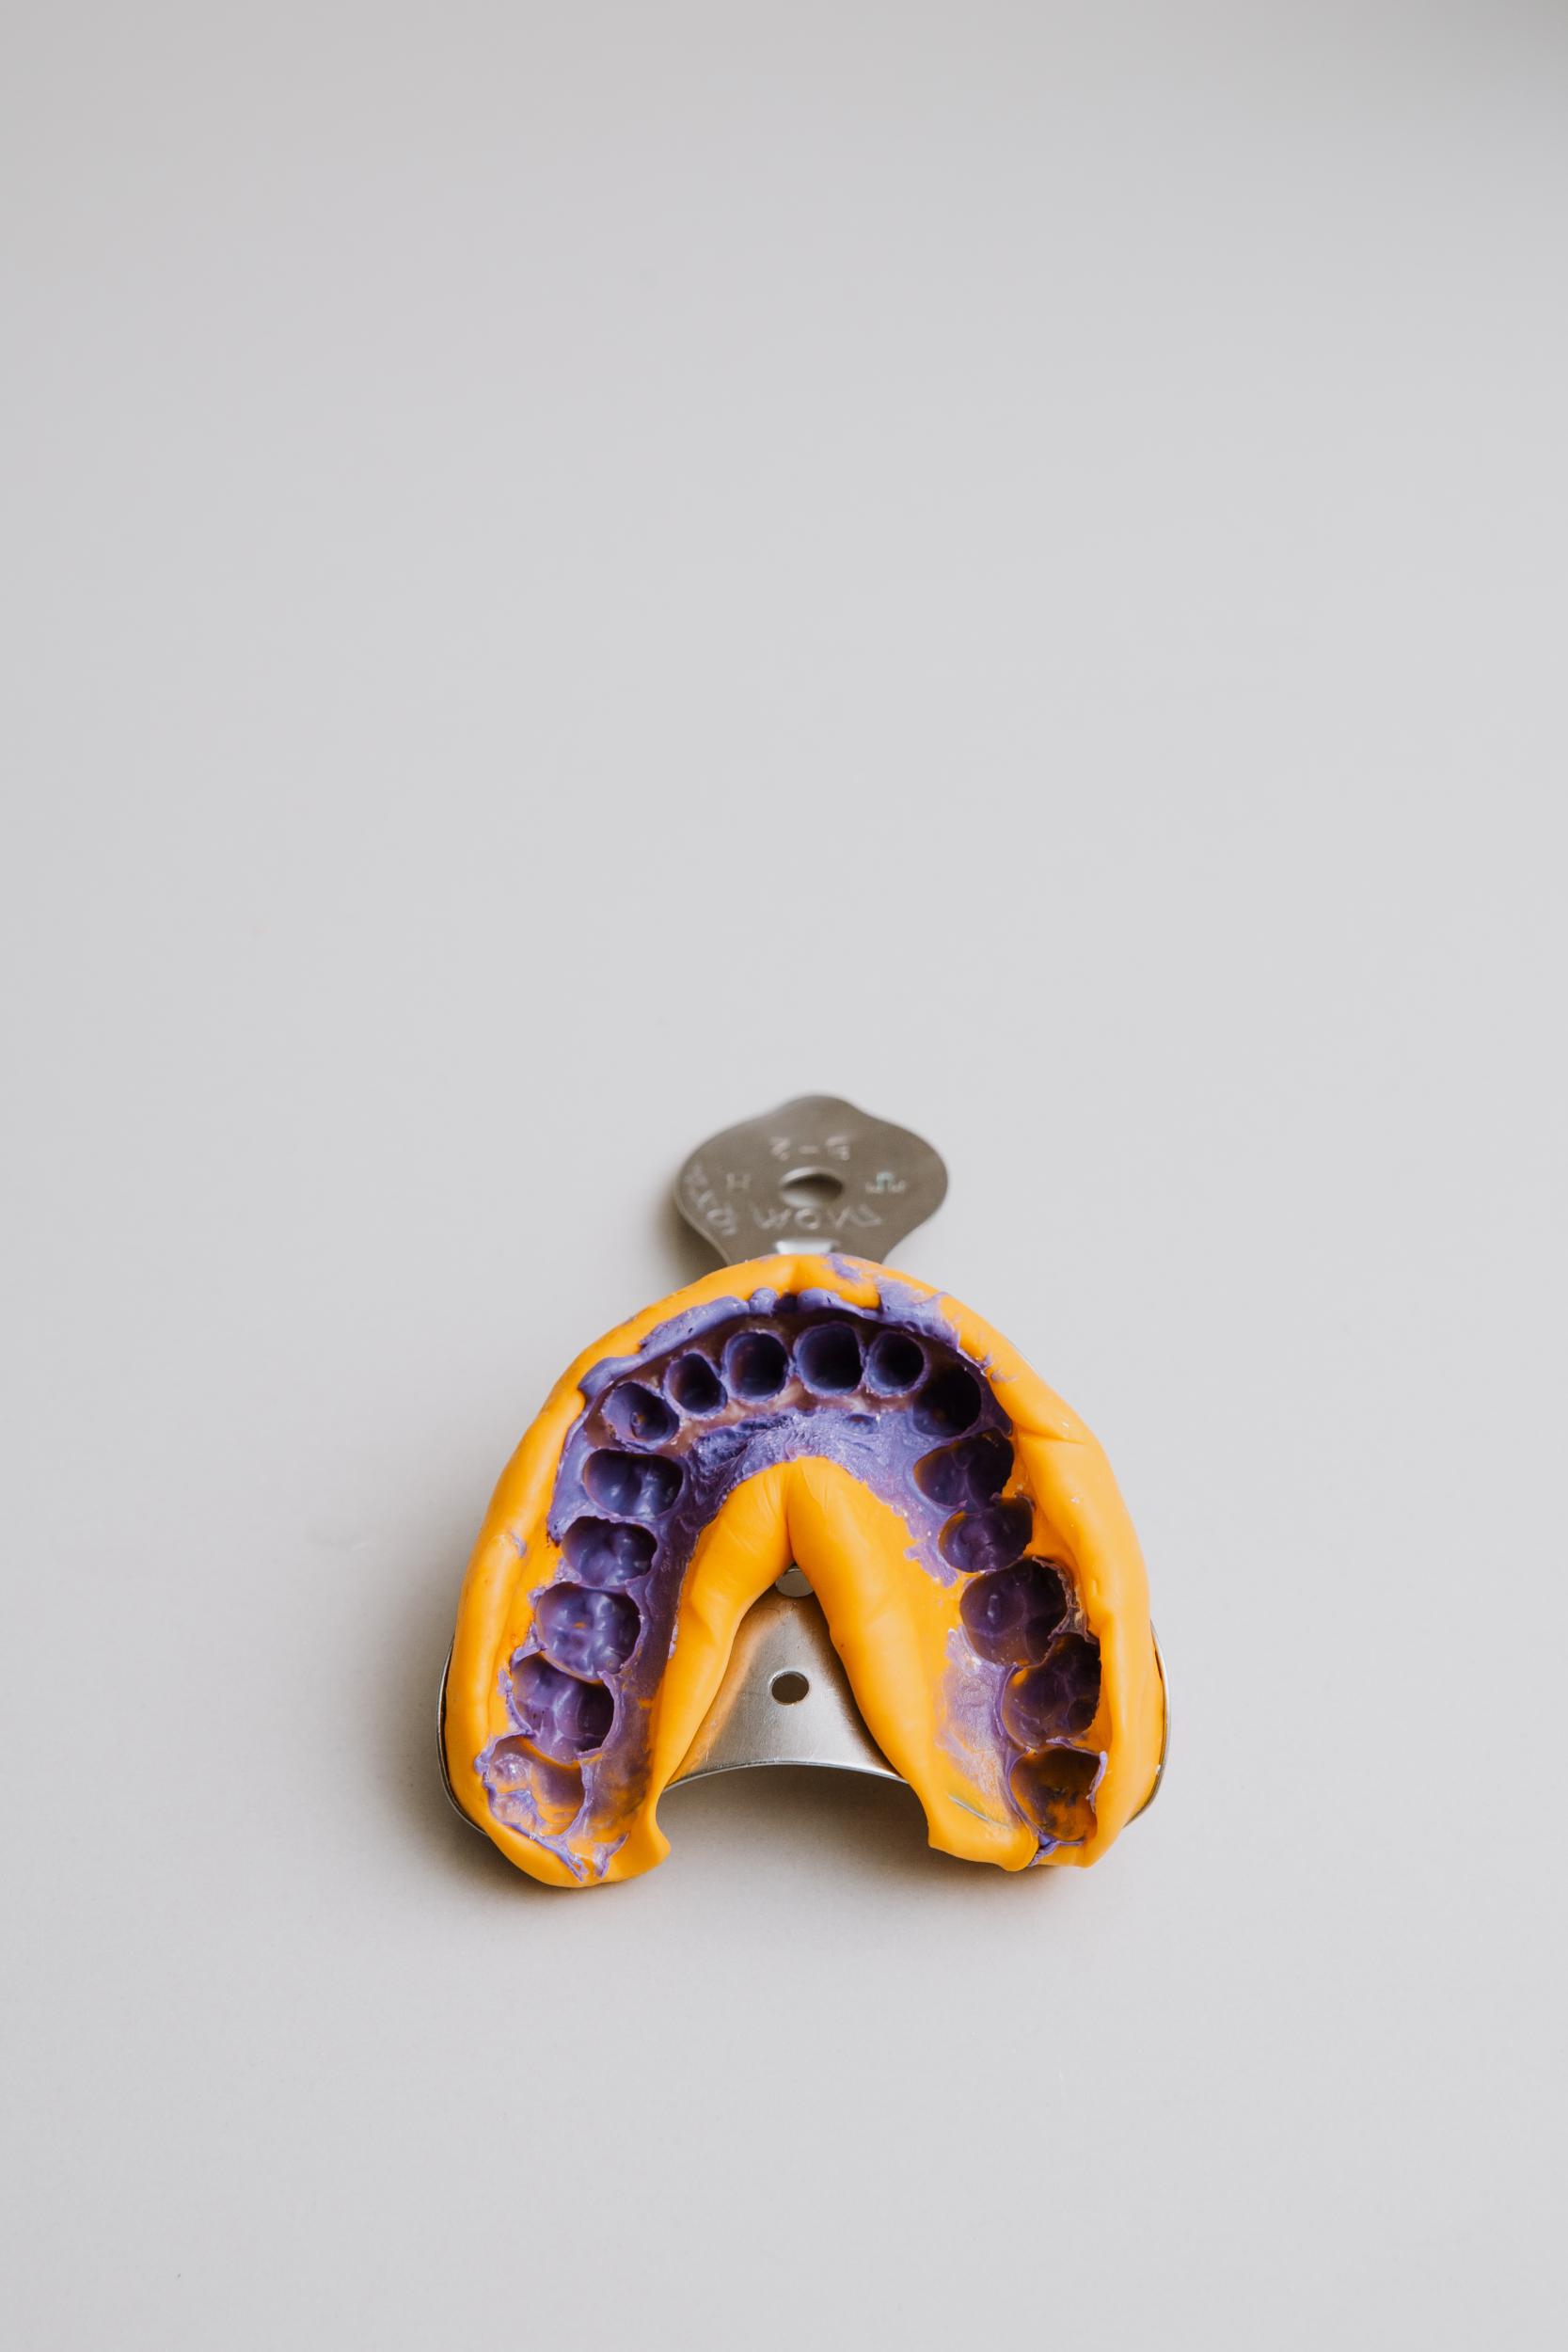 Get Partial Dentures In Carmel, IN: Replace Missing Teeth At Top Dental Practice